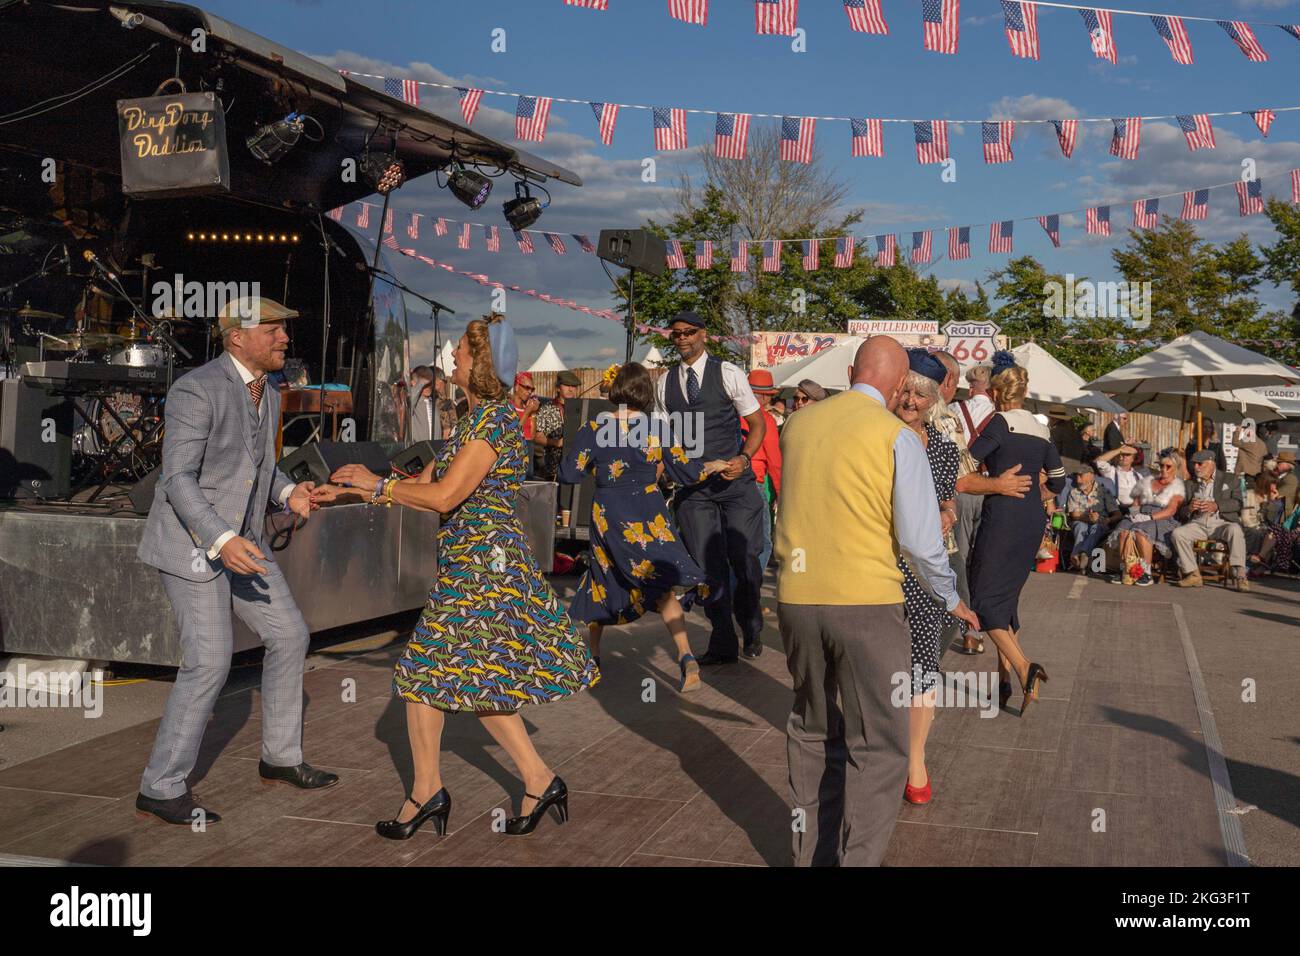 Dancing in full swing at the Goodwood Revival Stock Photo